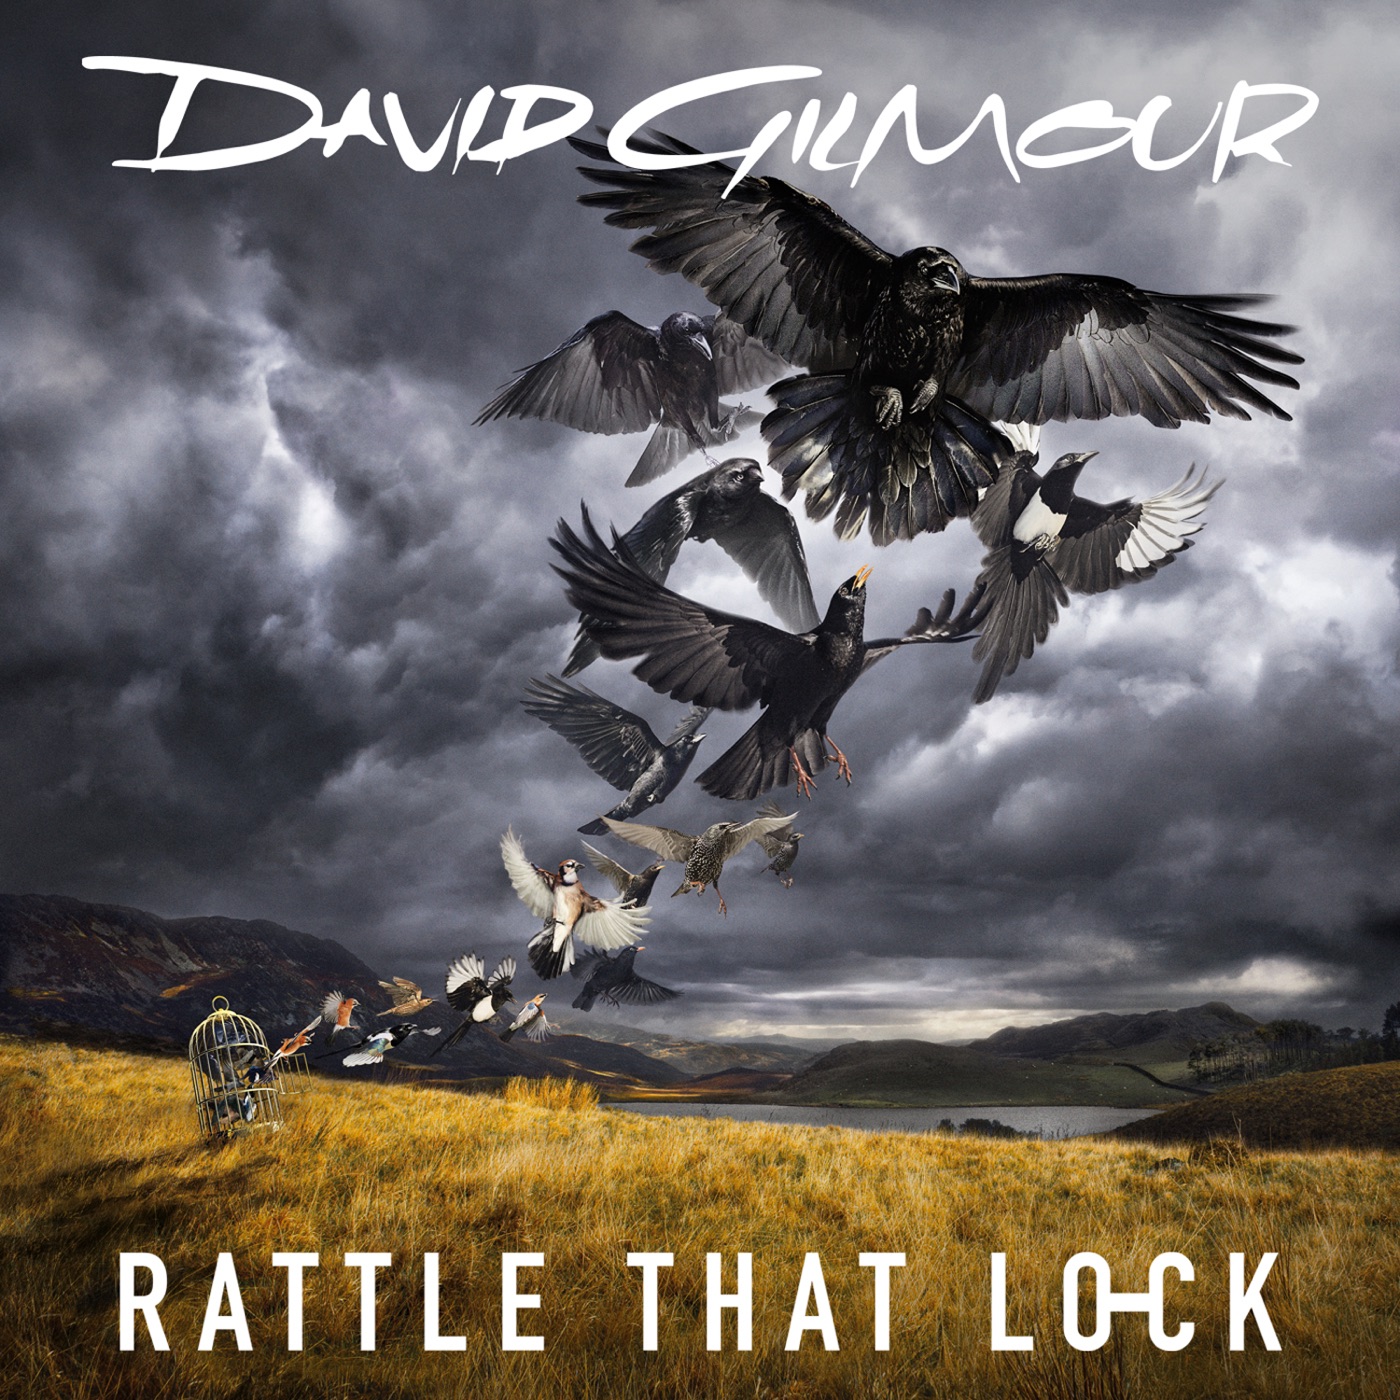 Rattle That Lock (Radio Edit) by David Gilmour